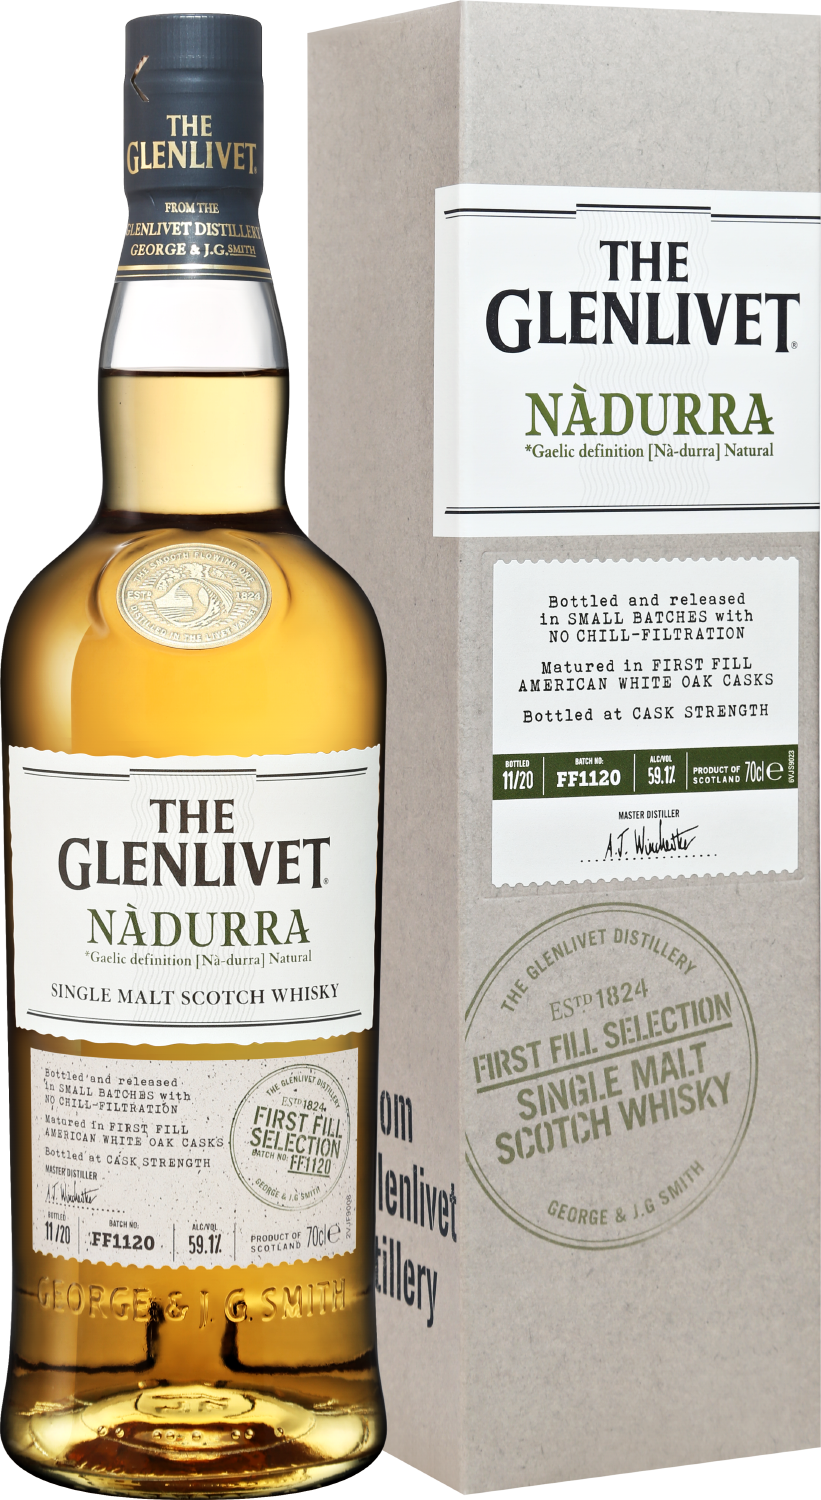 The Glenlivet Nadurra First Fill Selection Single Malt Scotch Whisky (gift box) the glenlivet french oak reserve single malt scotch whisky 15 y o gift box